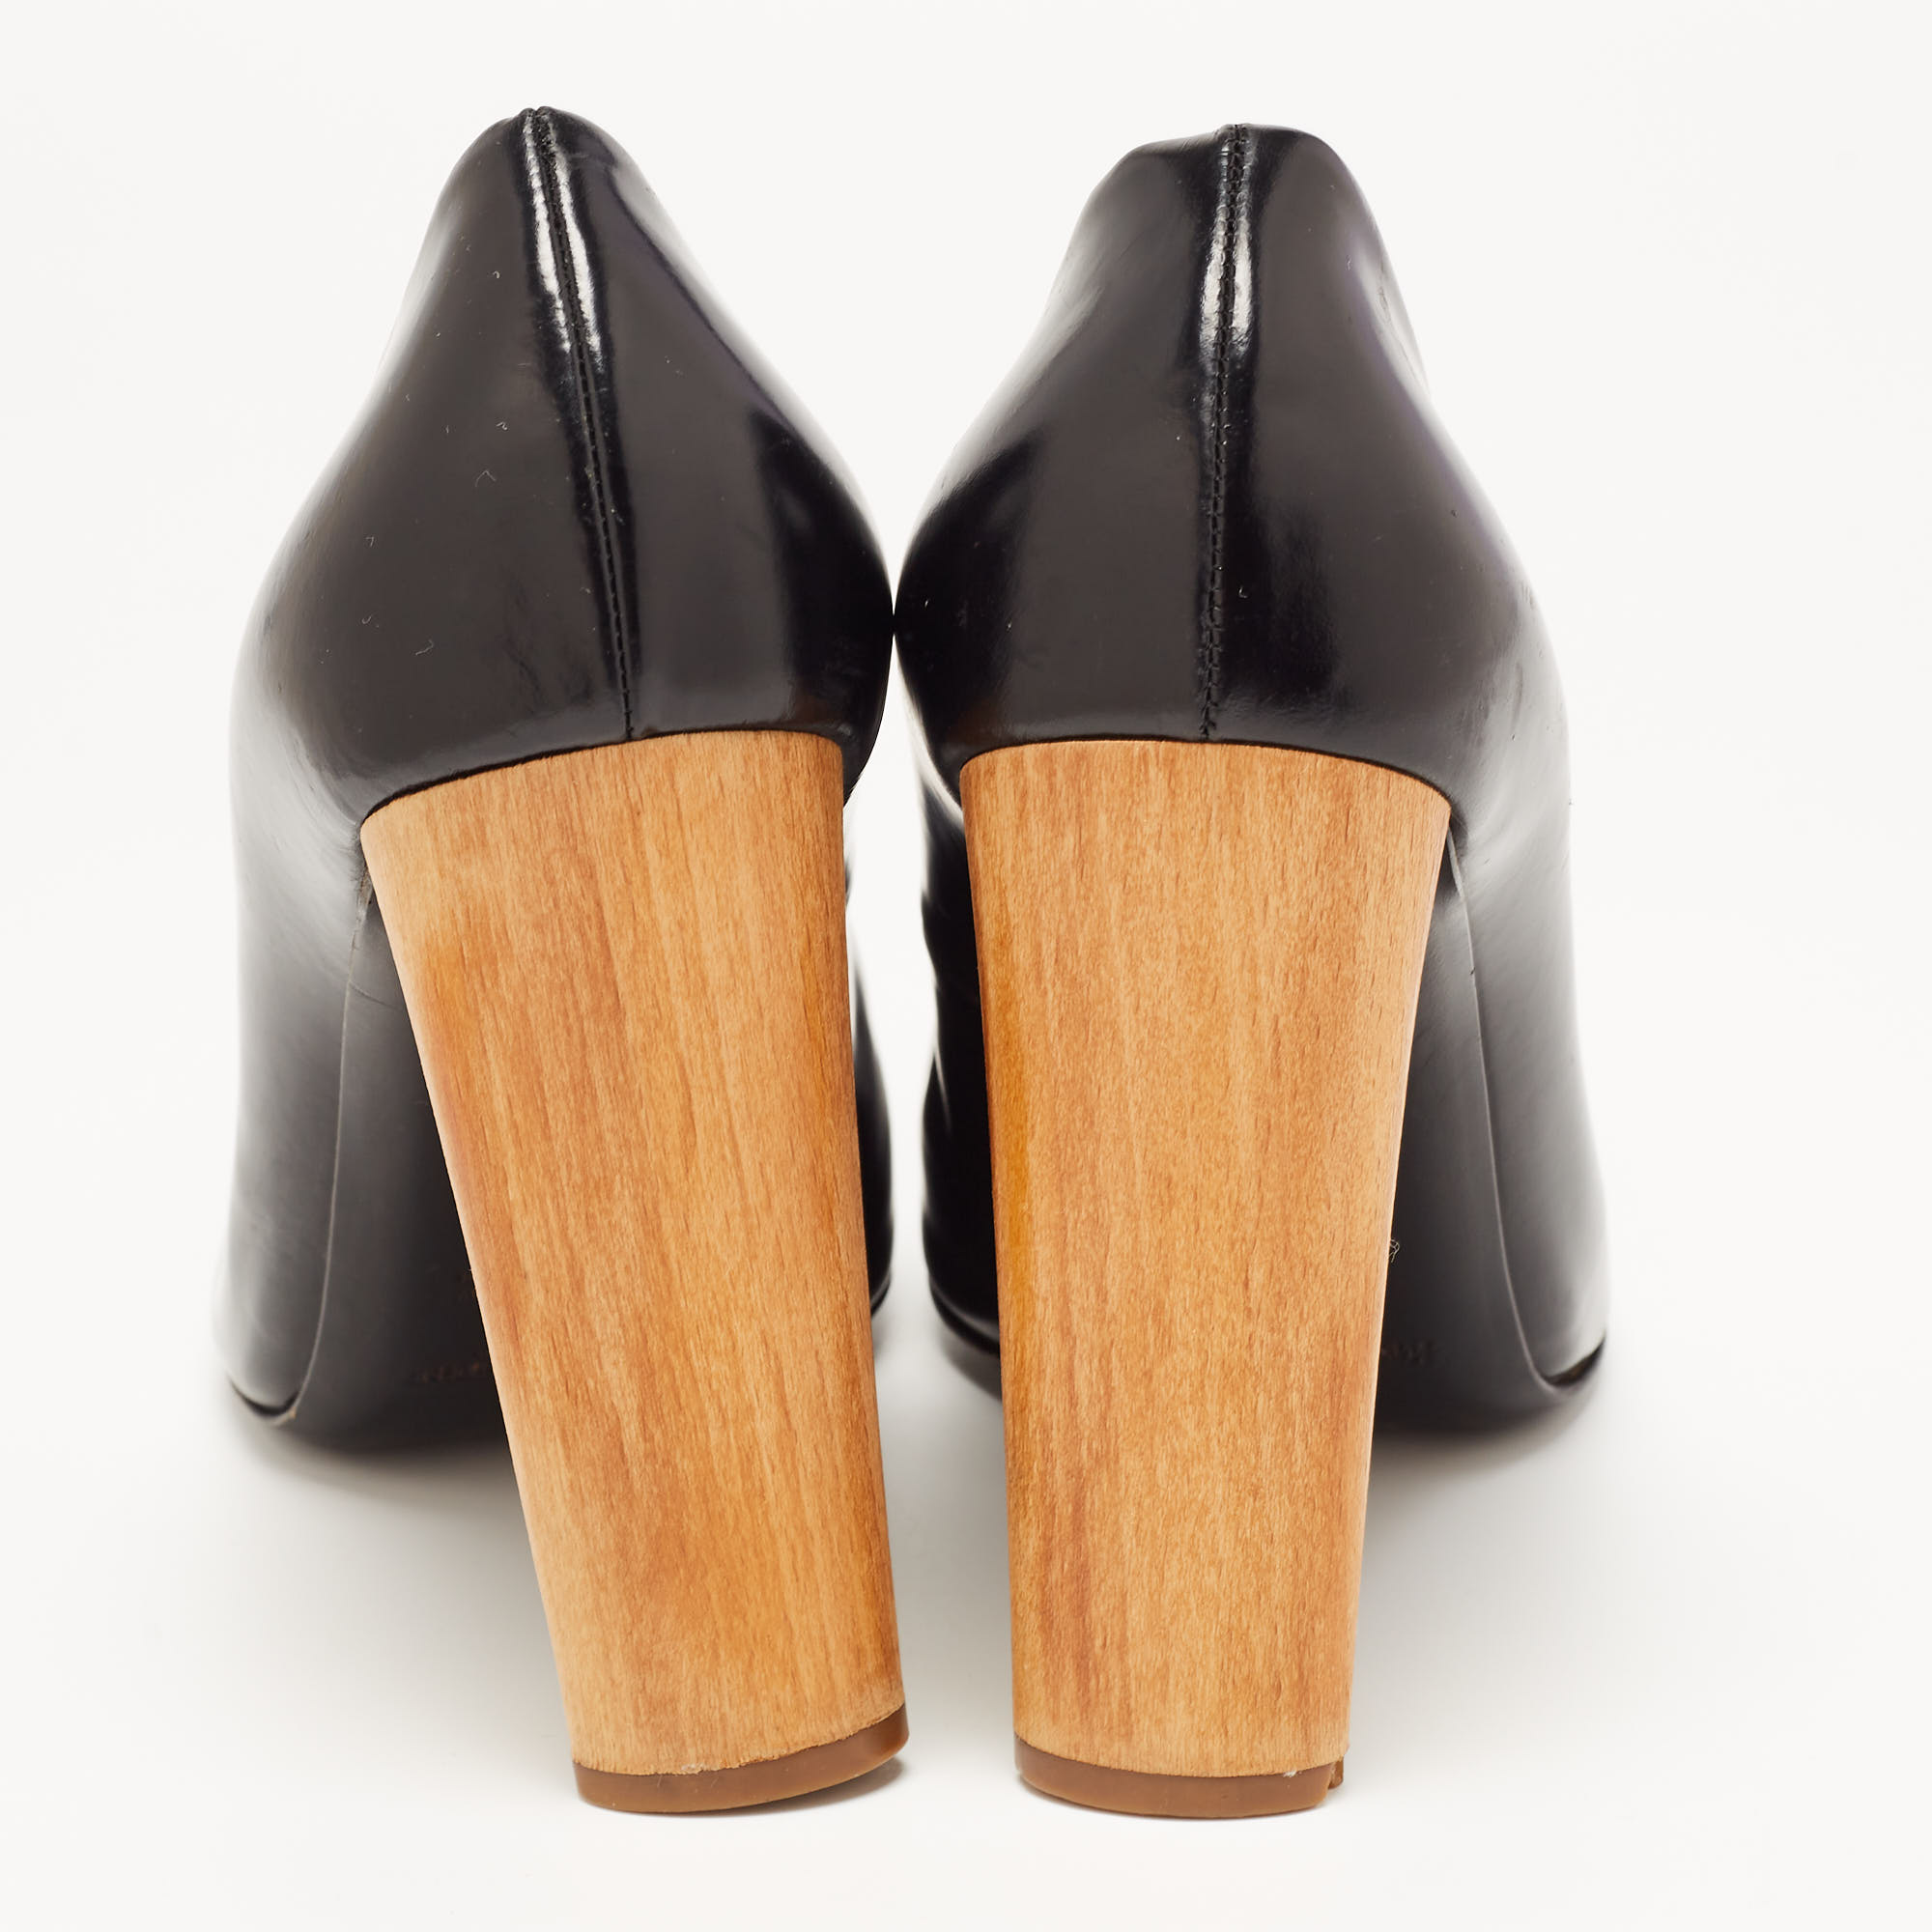 Yves Saint Laurent Black Leather Pointed Toe Wood Heel Pumps Size 41